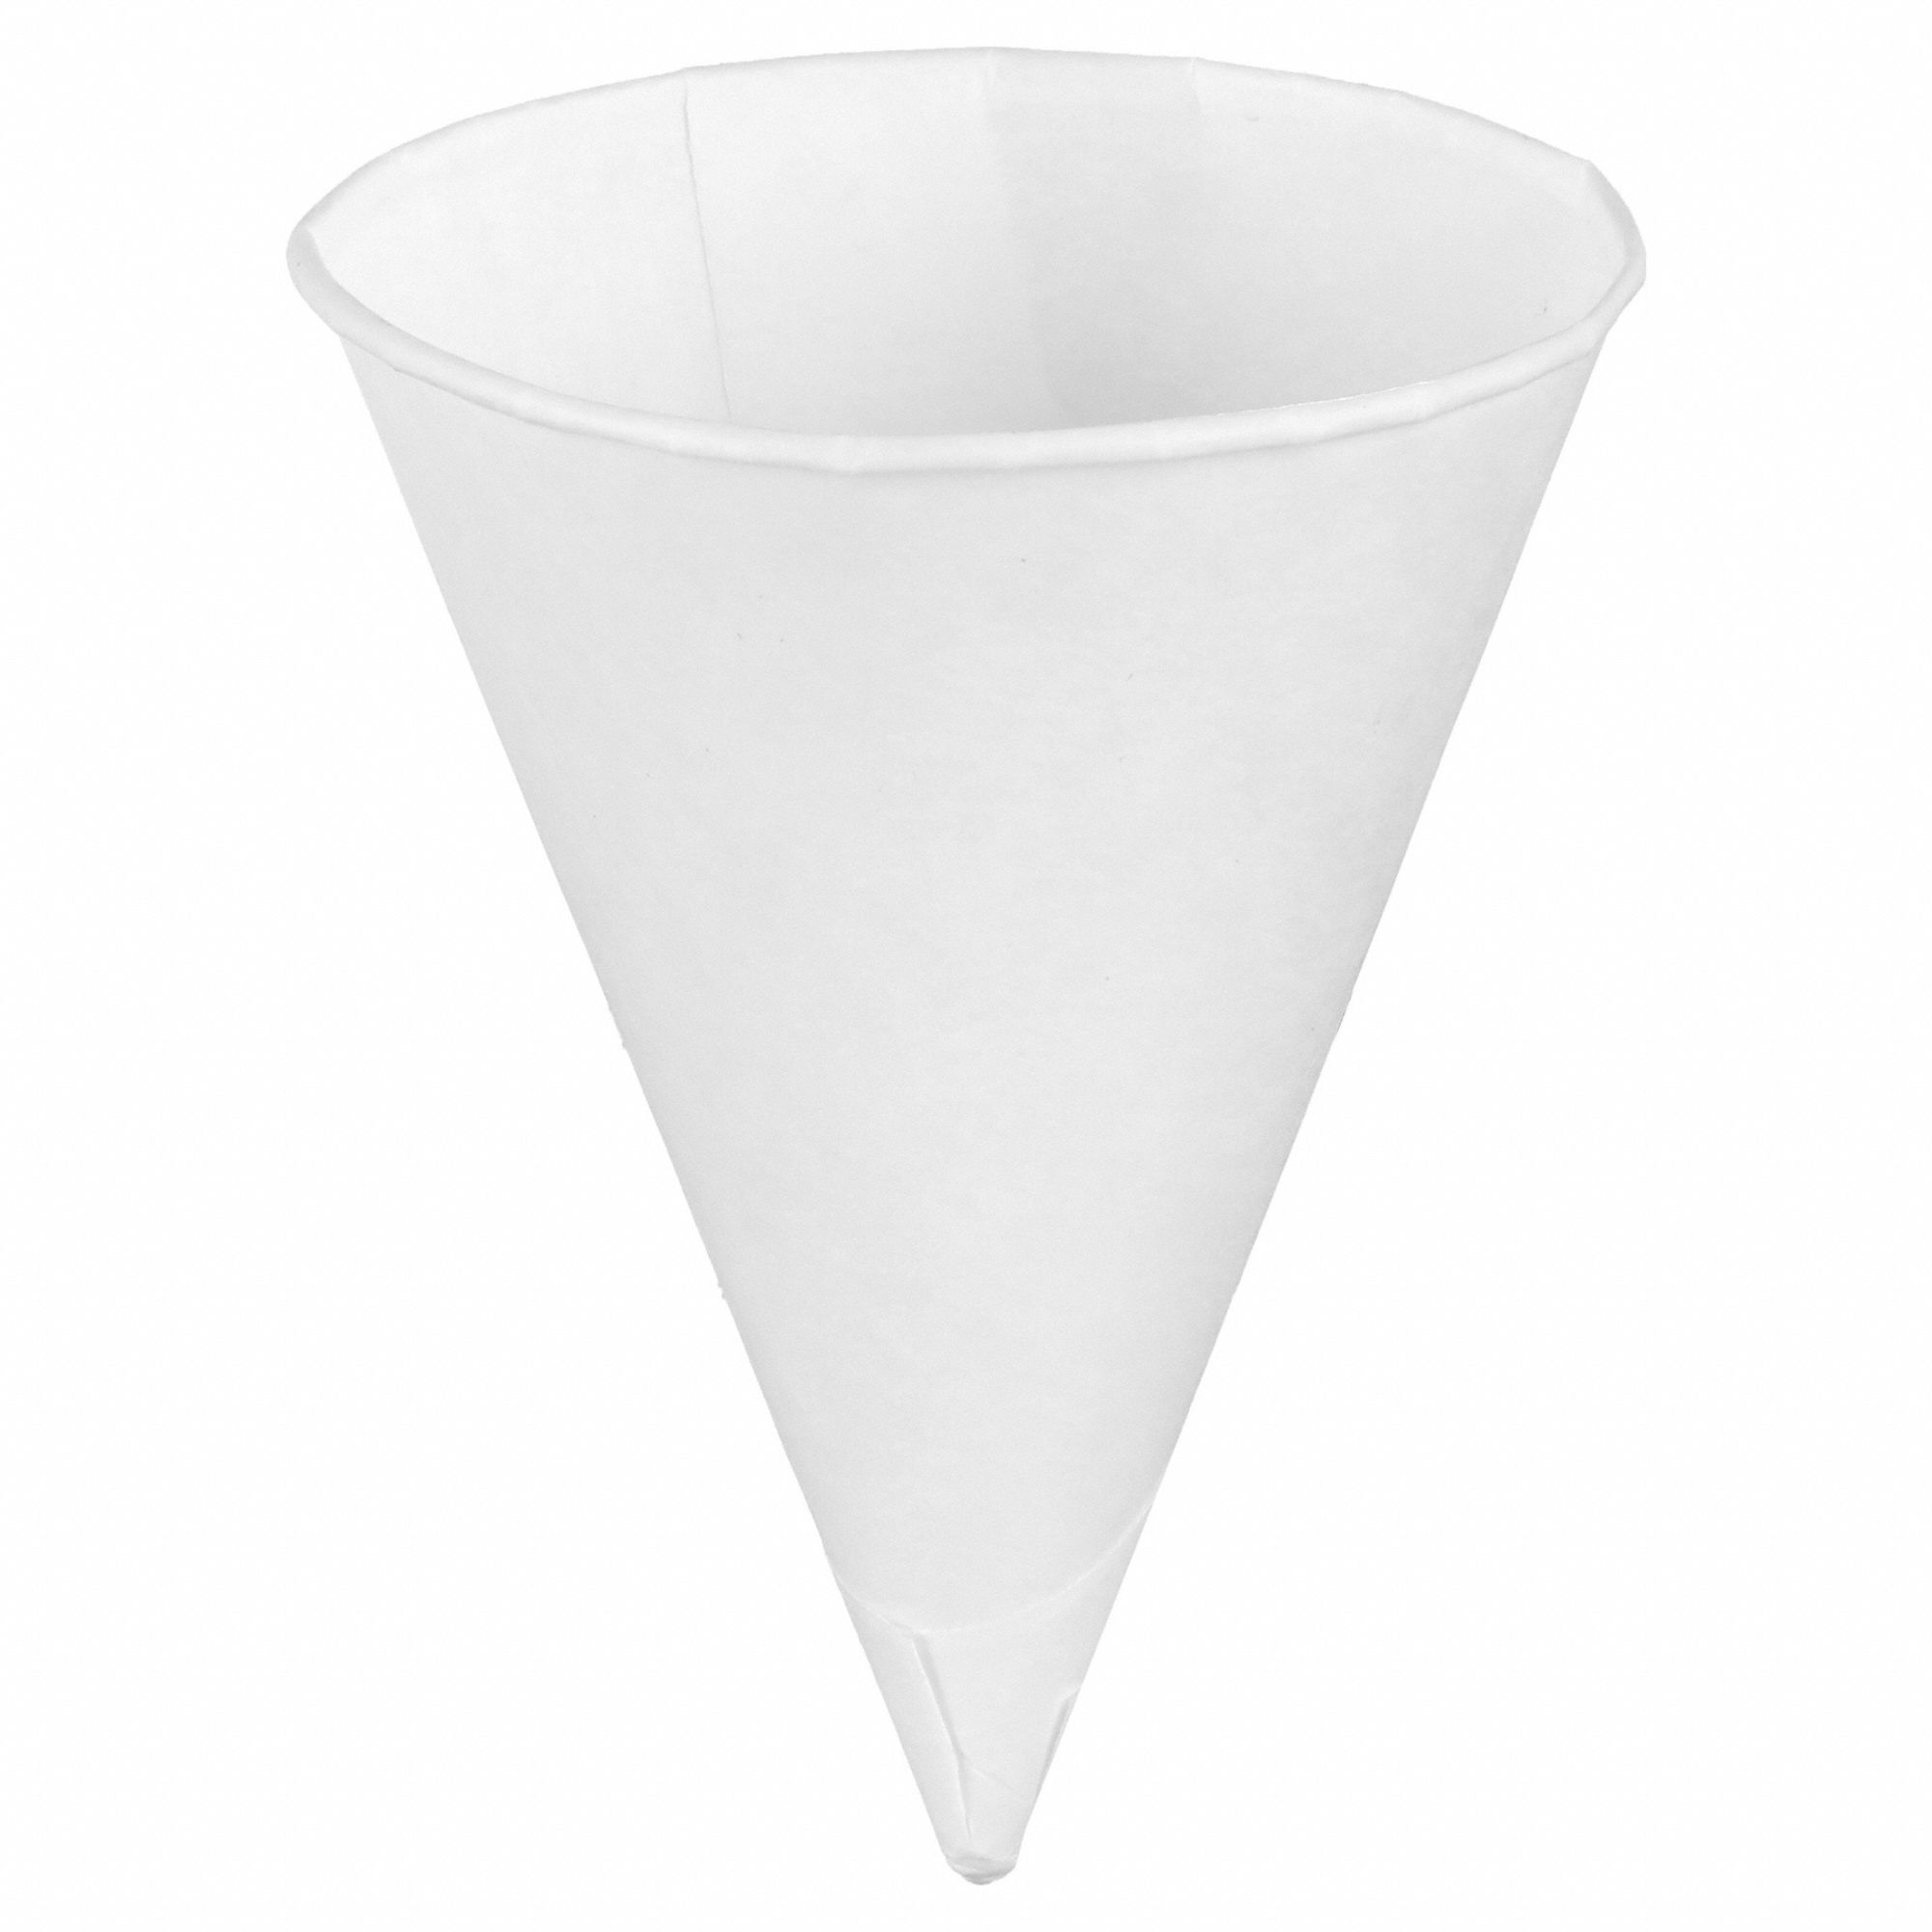 4.25 oz Capacity, White, Disposable Cone Cup - 25K815|25K815 - Grainger